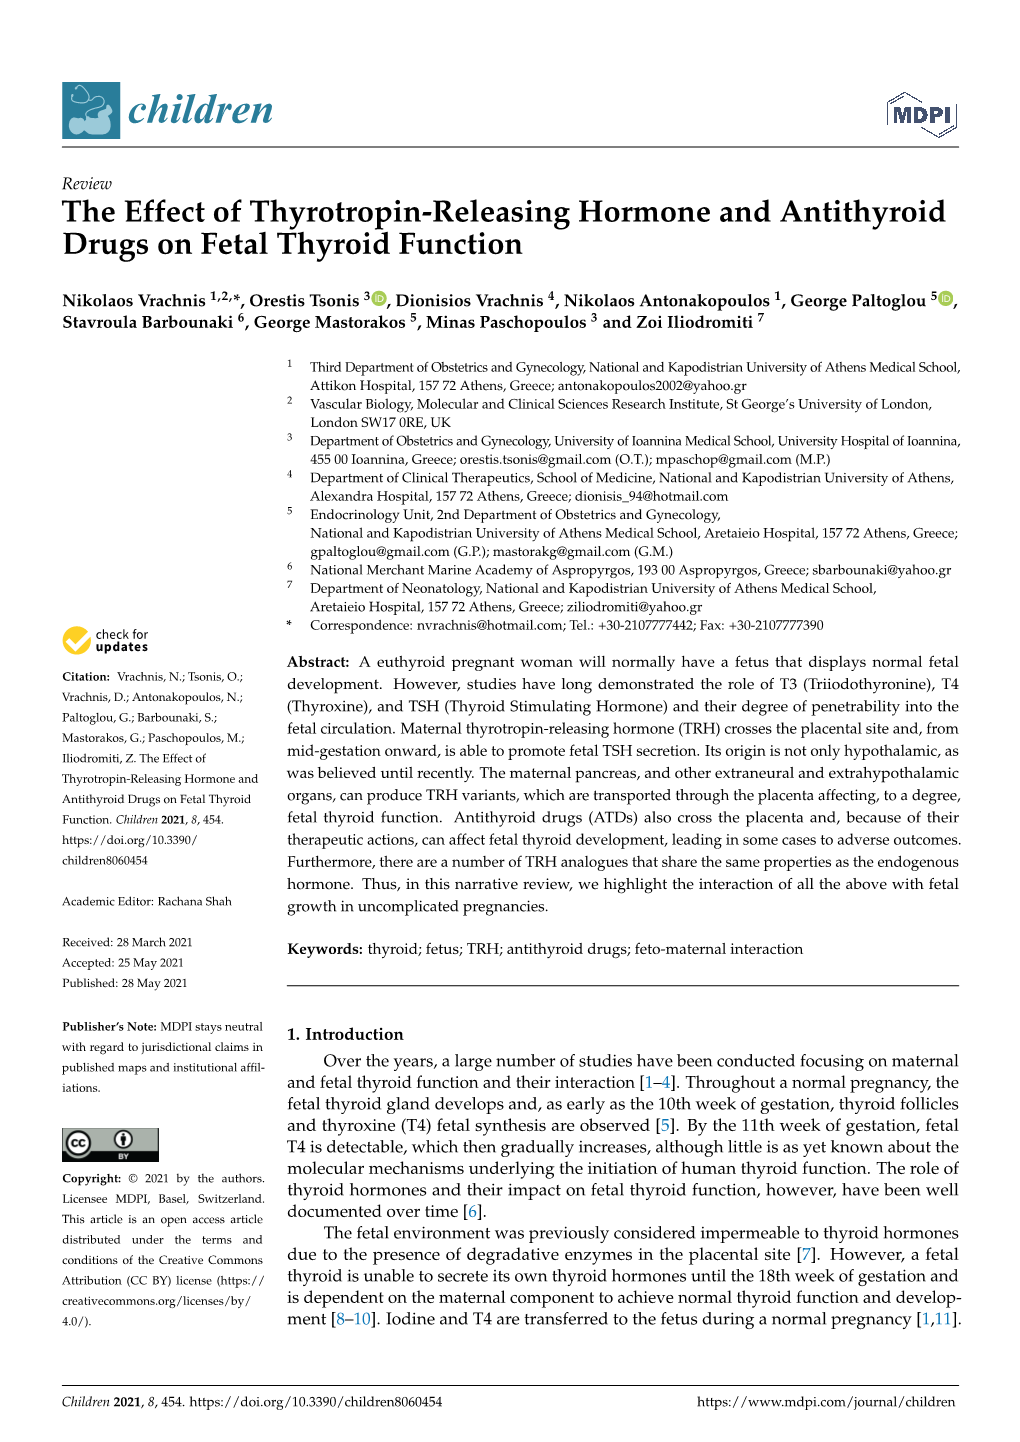 The Effect of Thyrotropin-Releasing Hormone and Antithyroid Drugs on Fetal Thyroid Function